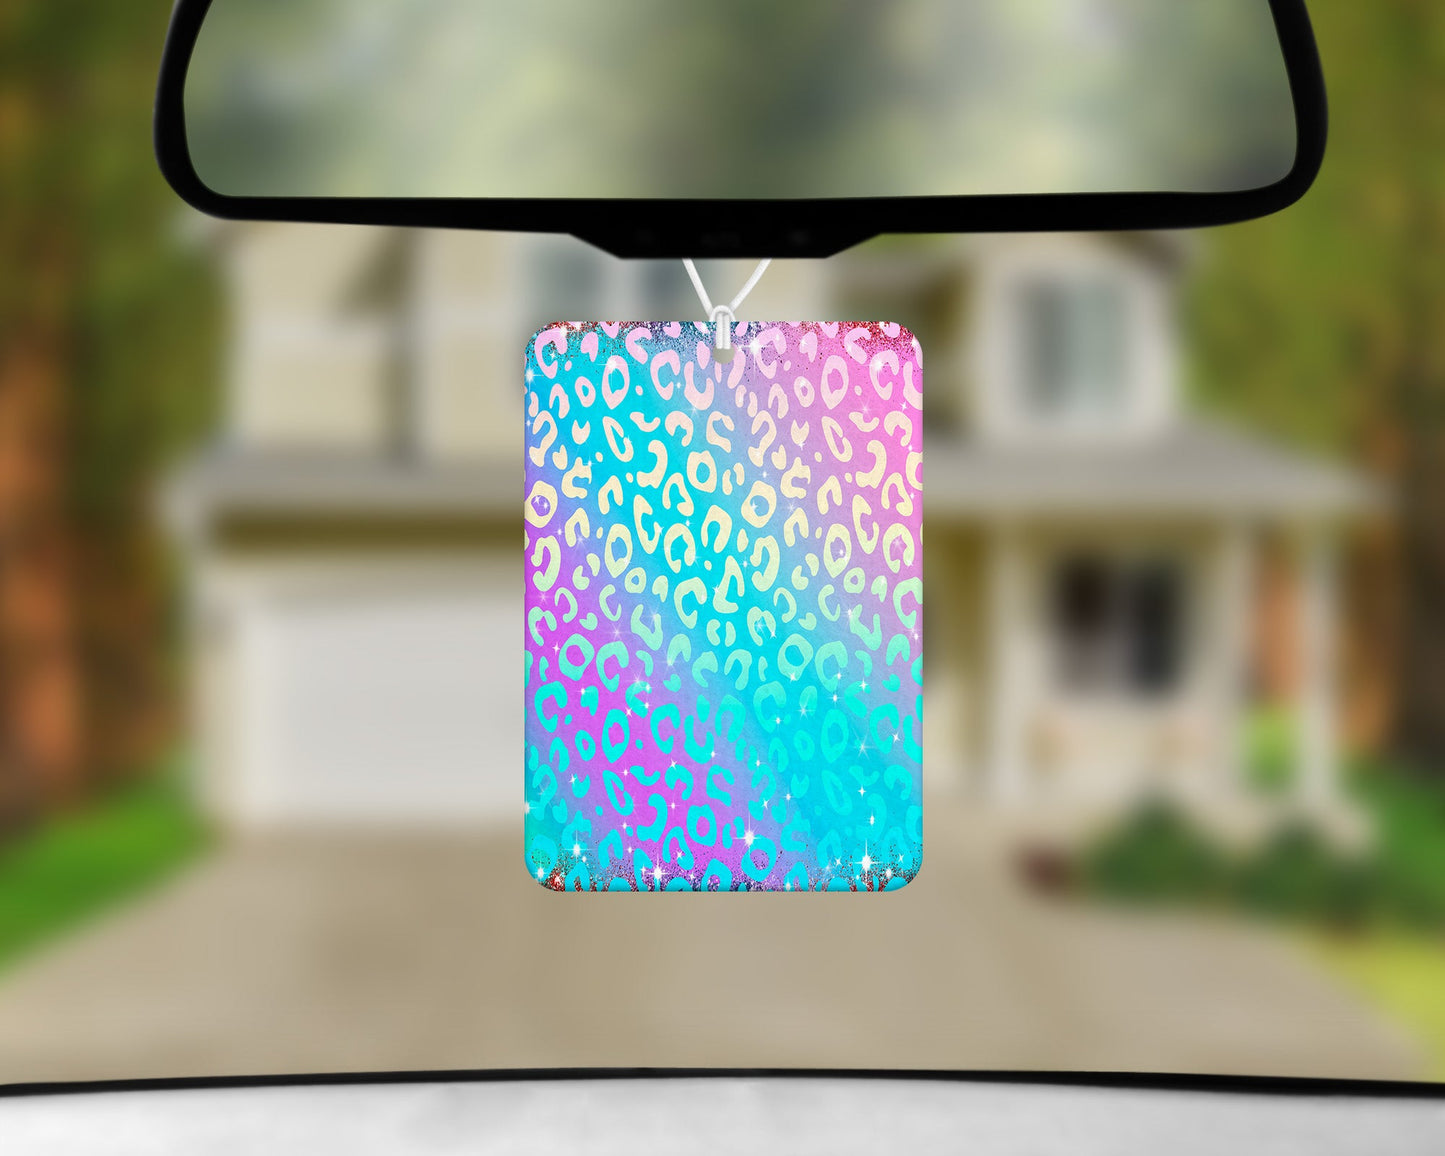 Neon Leopard Print|Freshie|Includes Scent Bottle - Vehicle Air Freshener